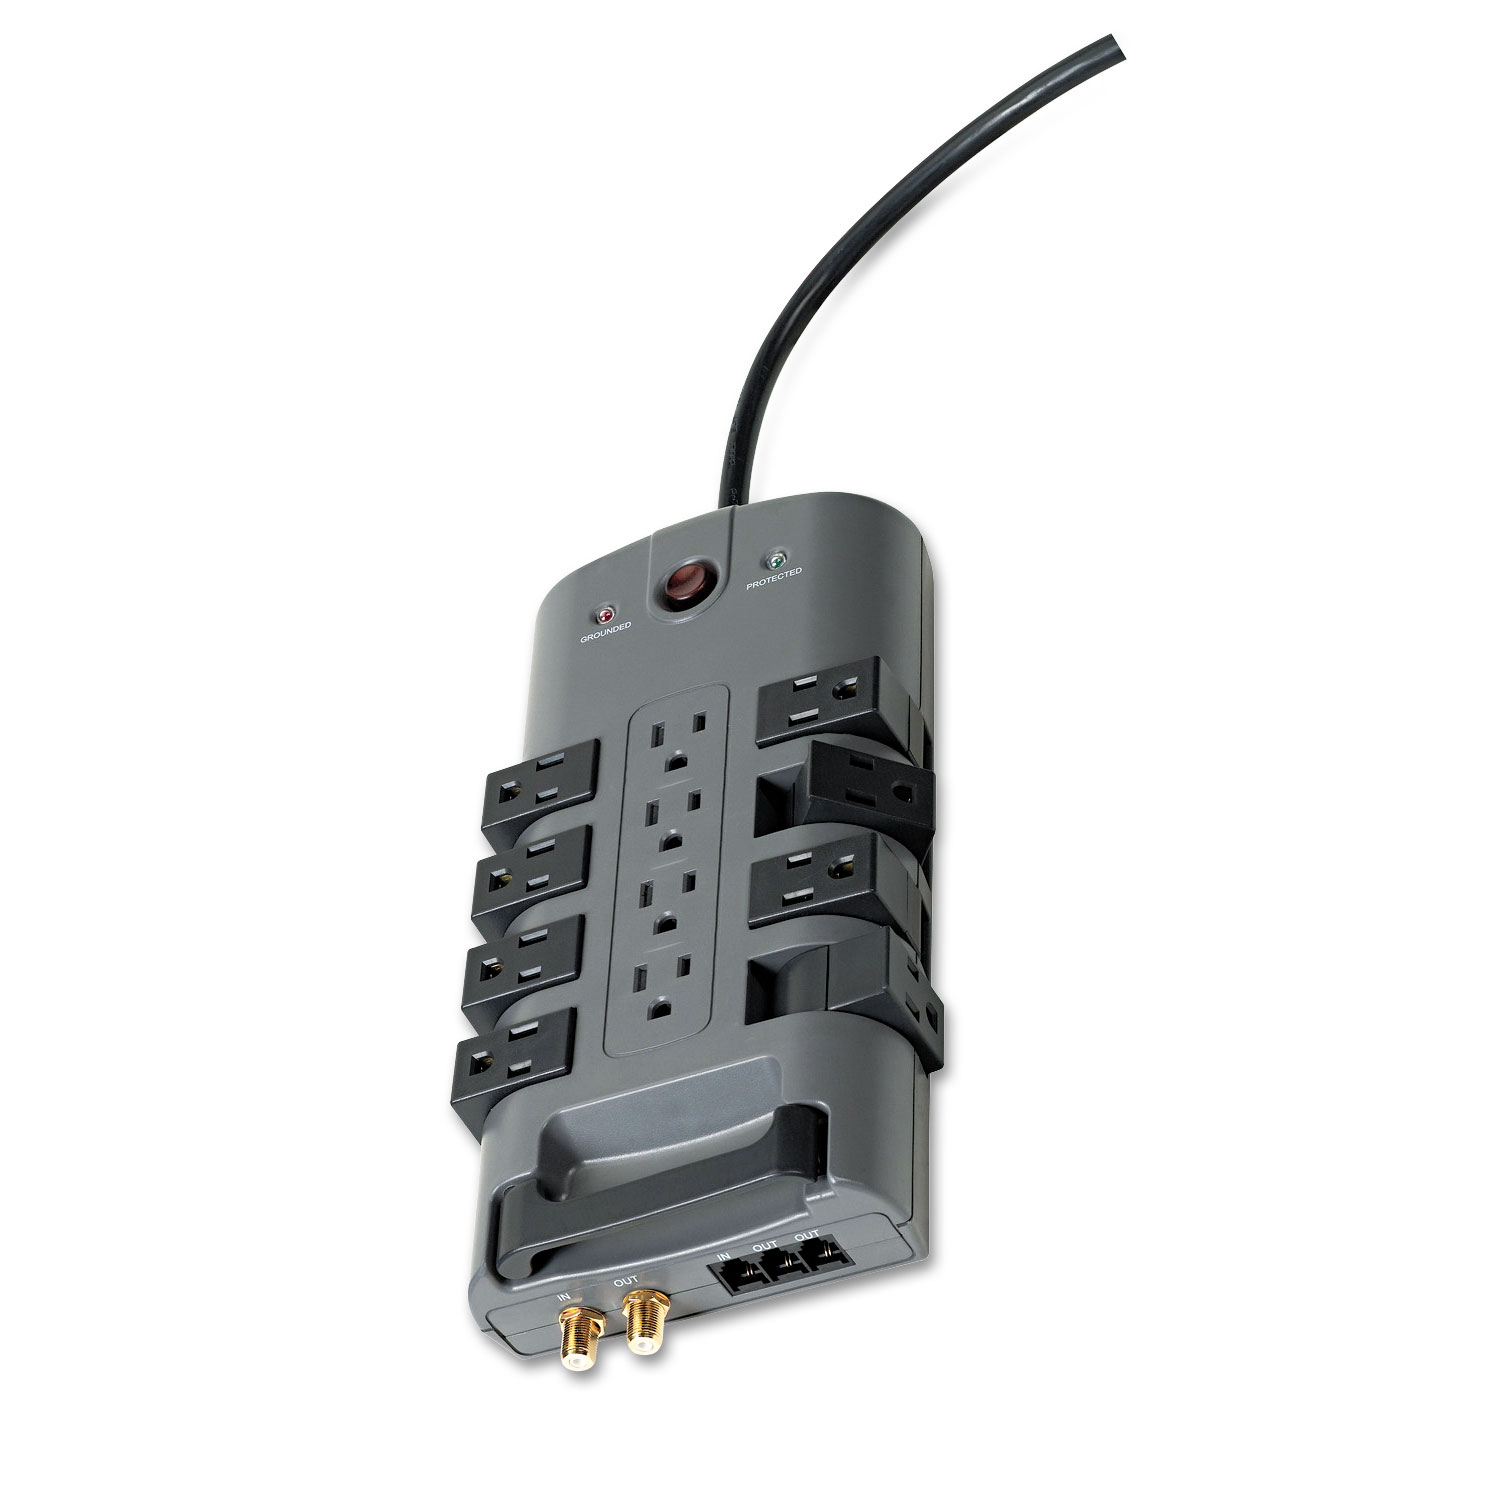  Belkin BP112230-08 Pivot Plug Surge Protector, 12 Outlets, 8 ft Cord, 4320 Joules, Gray (BLKBP11223008) 